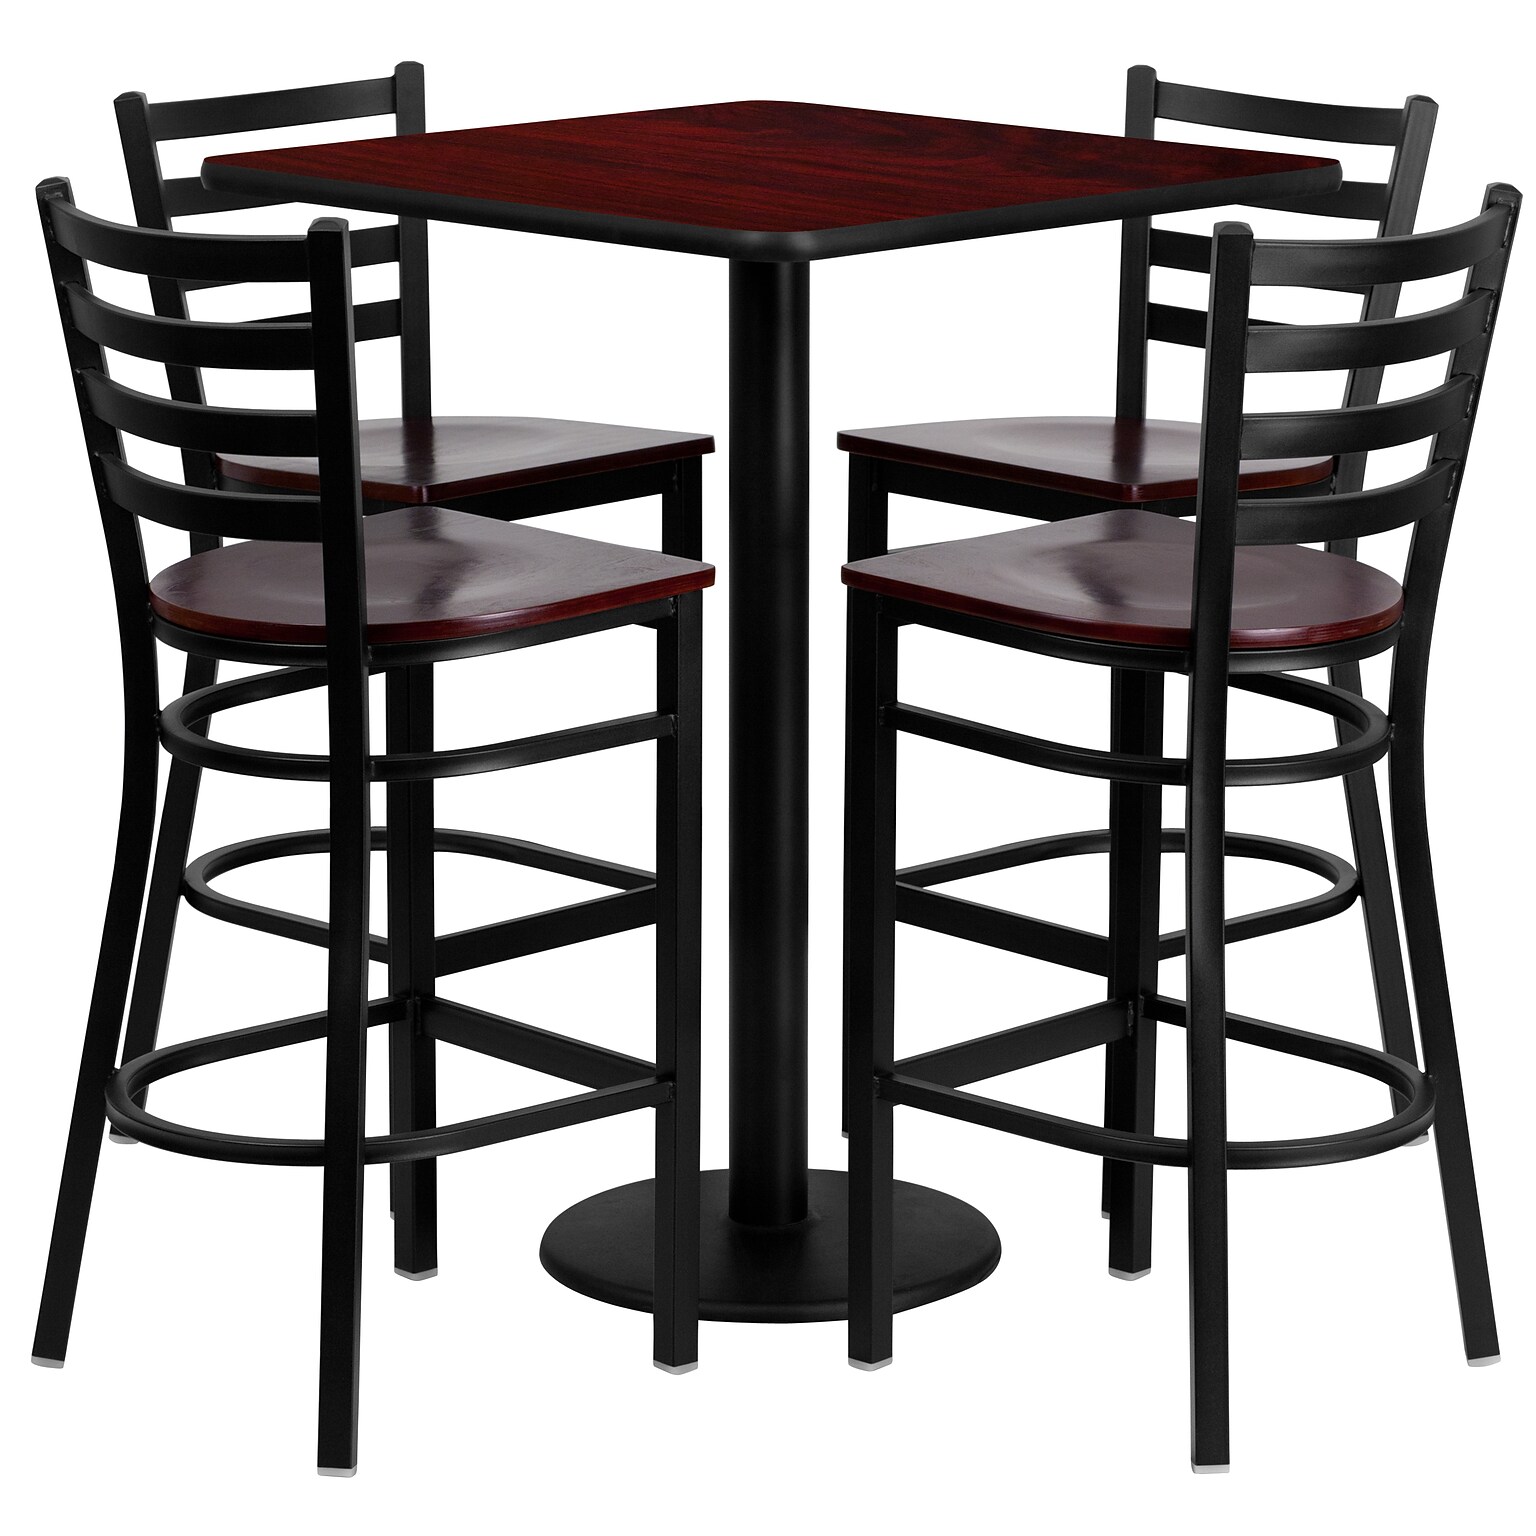 Flash Furniture Square Laminate Table Set with 4 Ladder Back Metal Bar Stool, 30 x 30, Mahogany Wood Seat (MD0014)